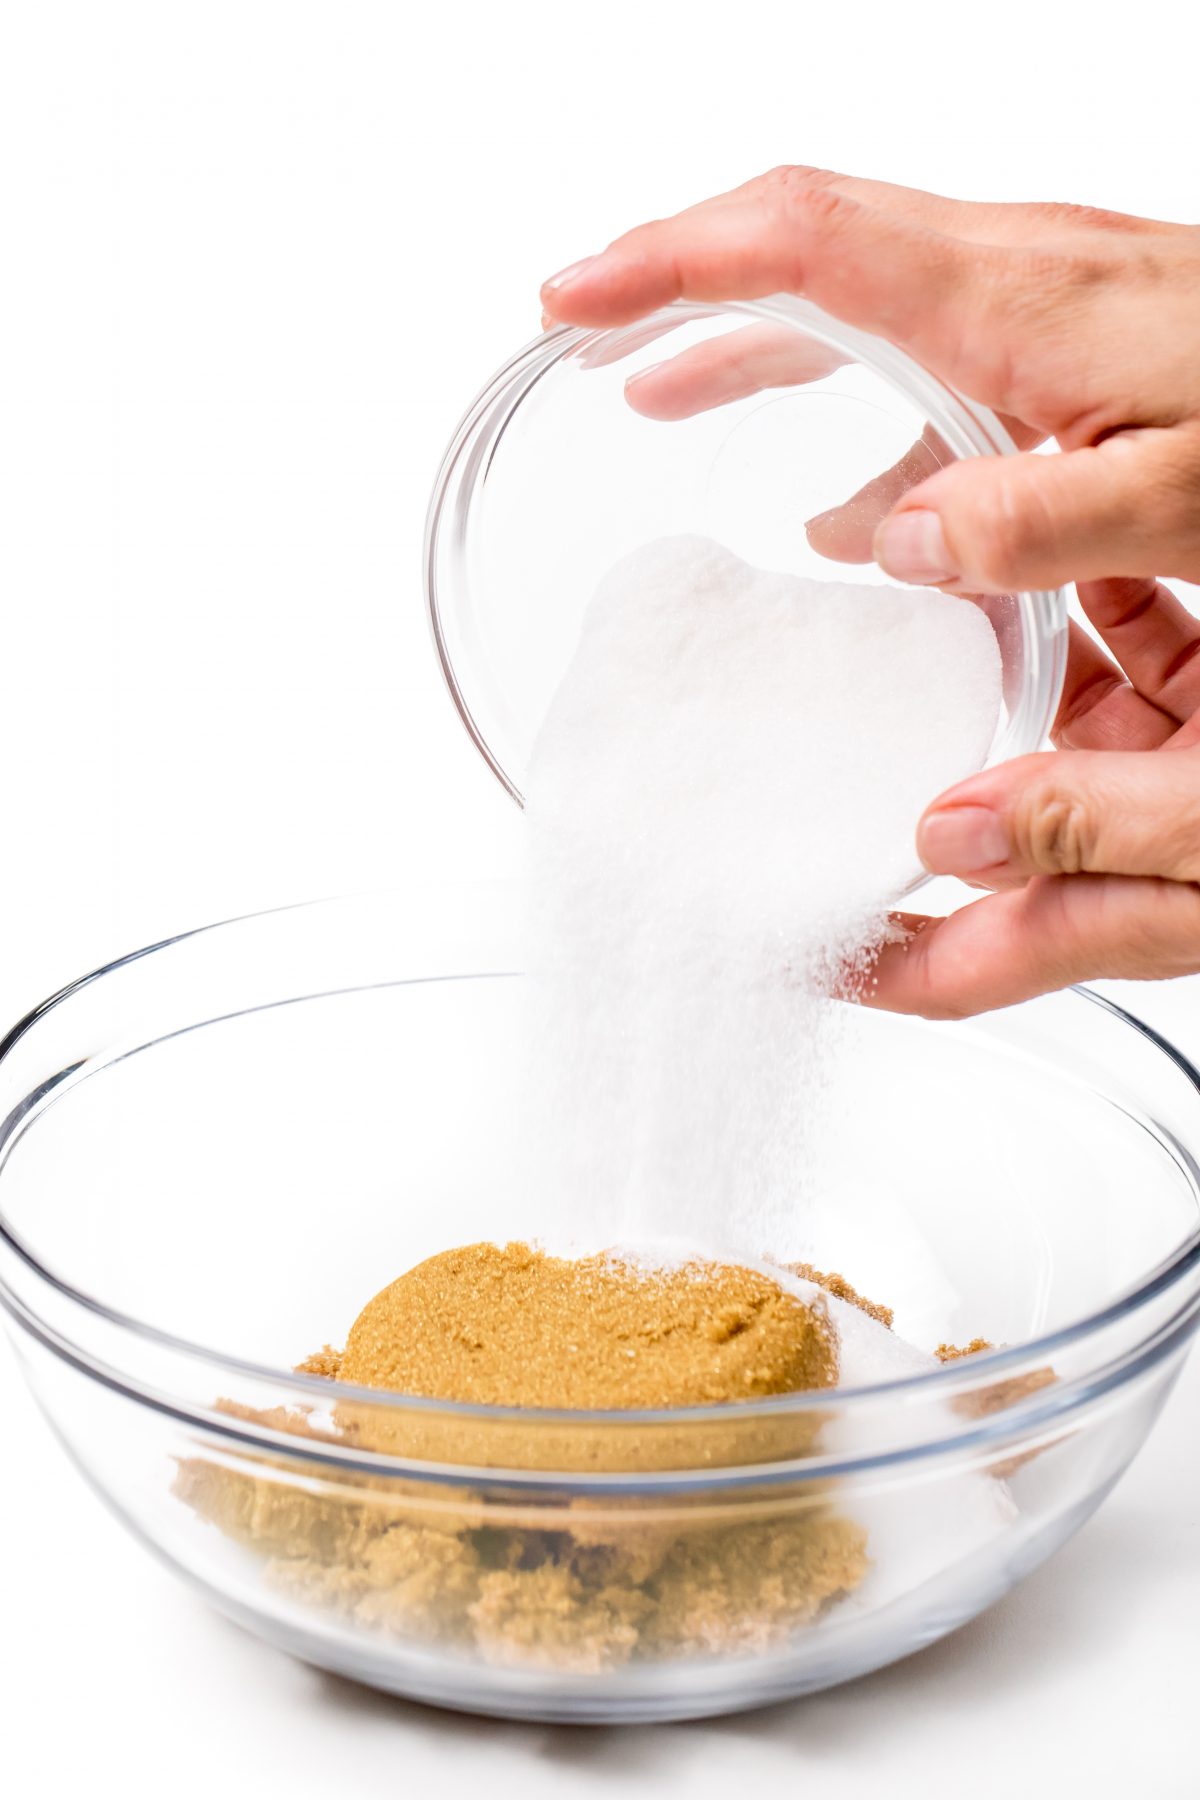 Chocolate sugar scrub - pouring granulated sugar into mixing bowl